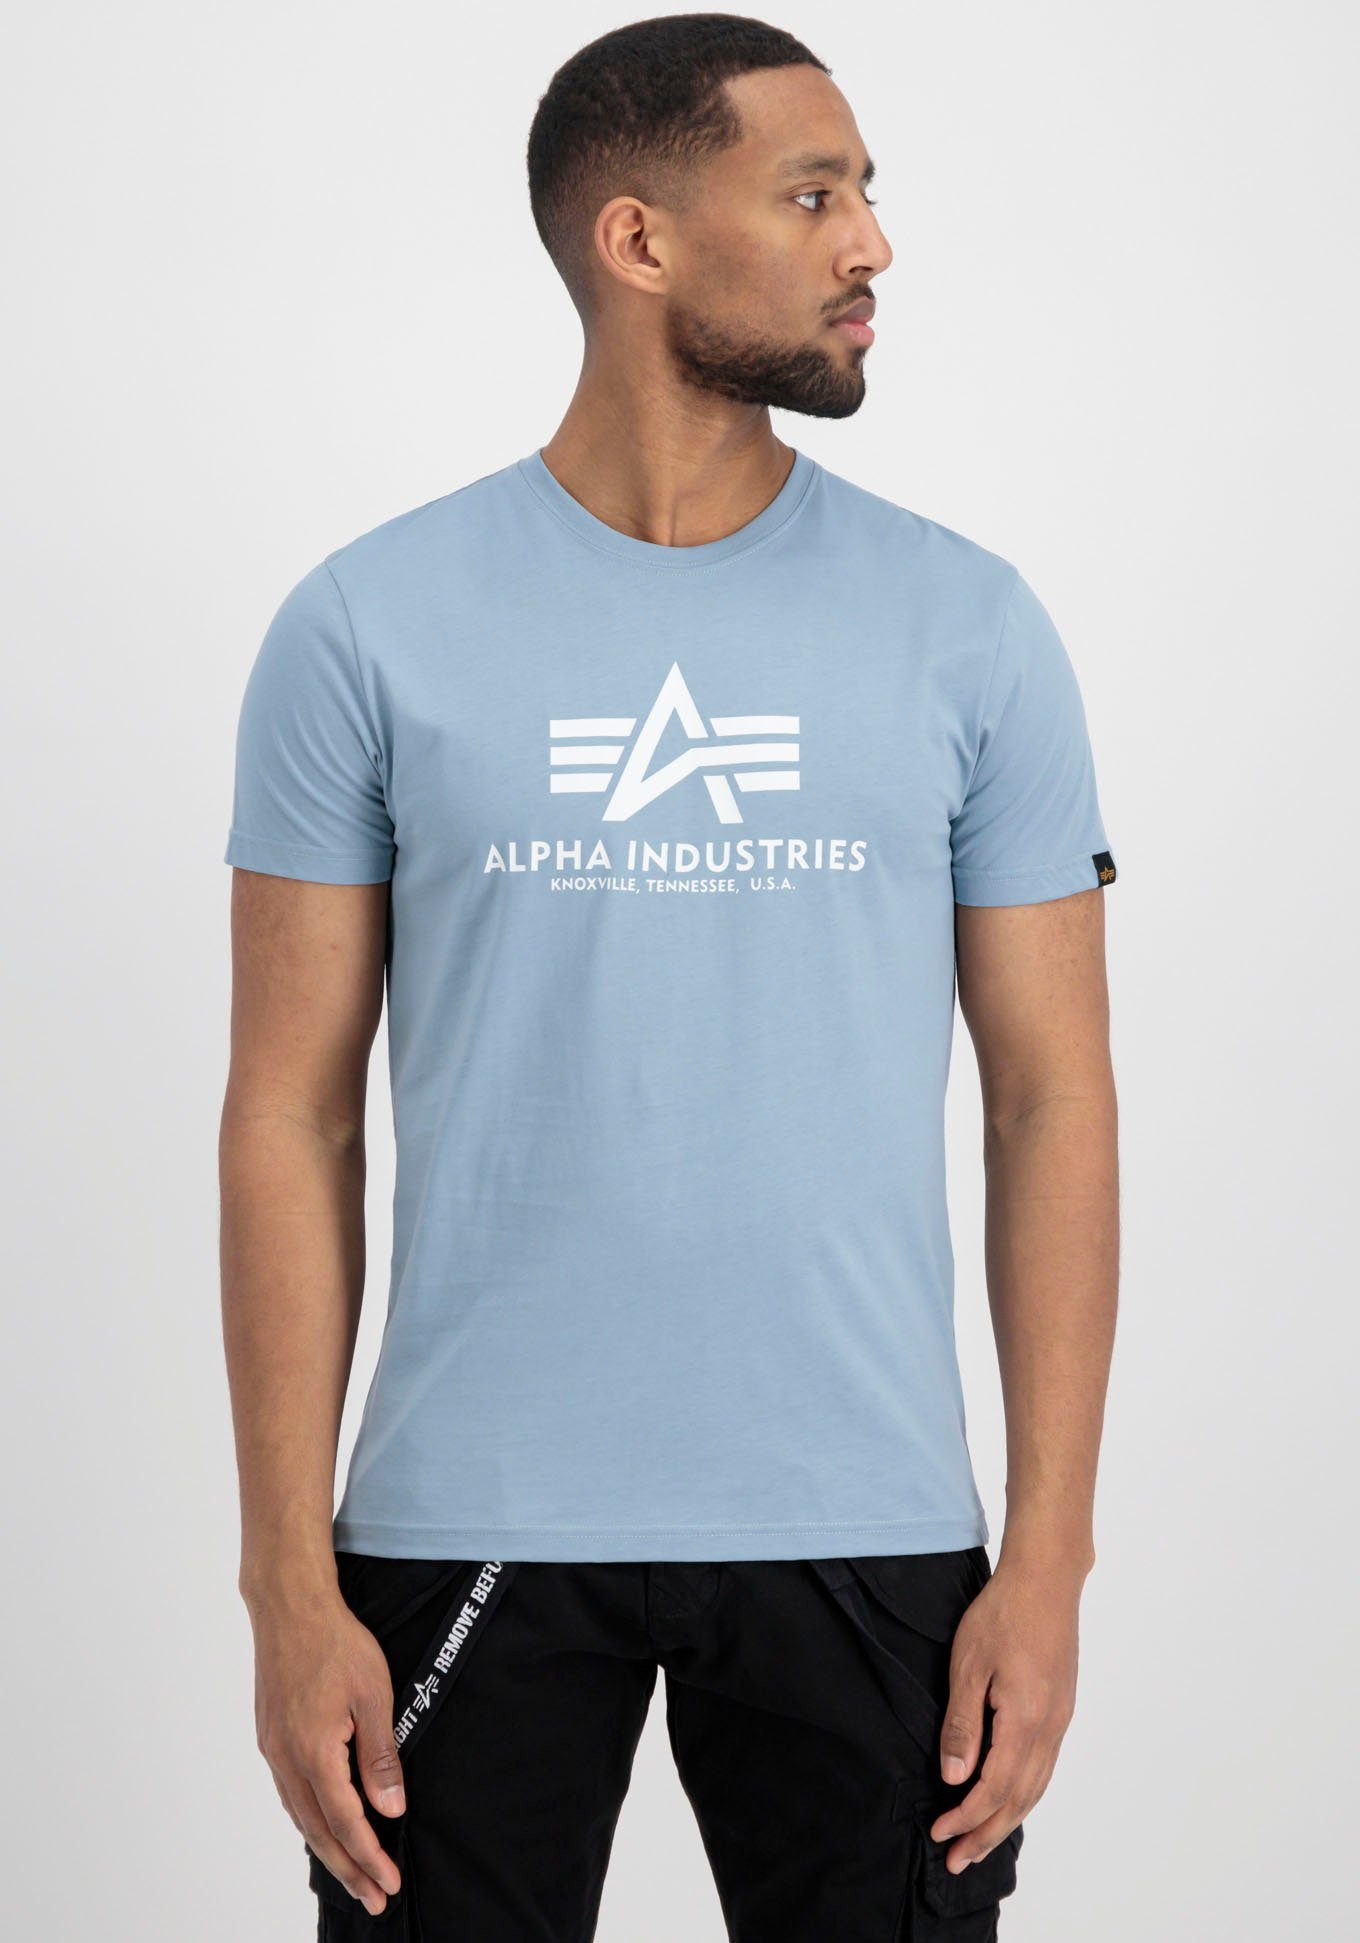 Industries Alpha T-Shirt T-Shirt Basic greyblue